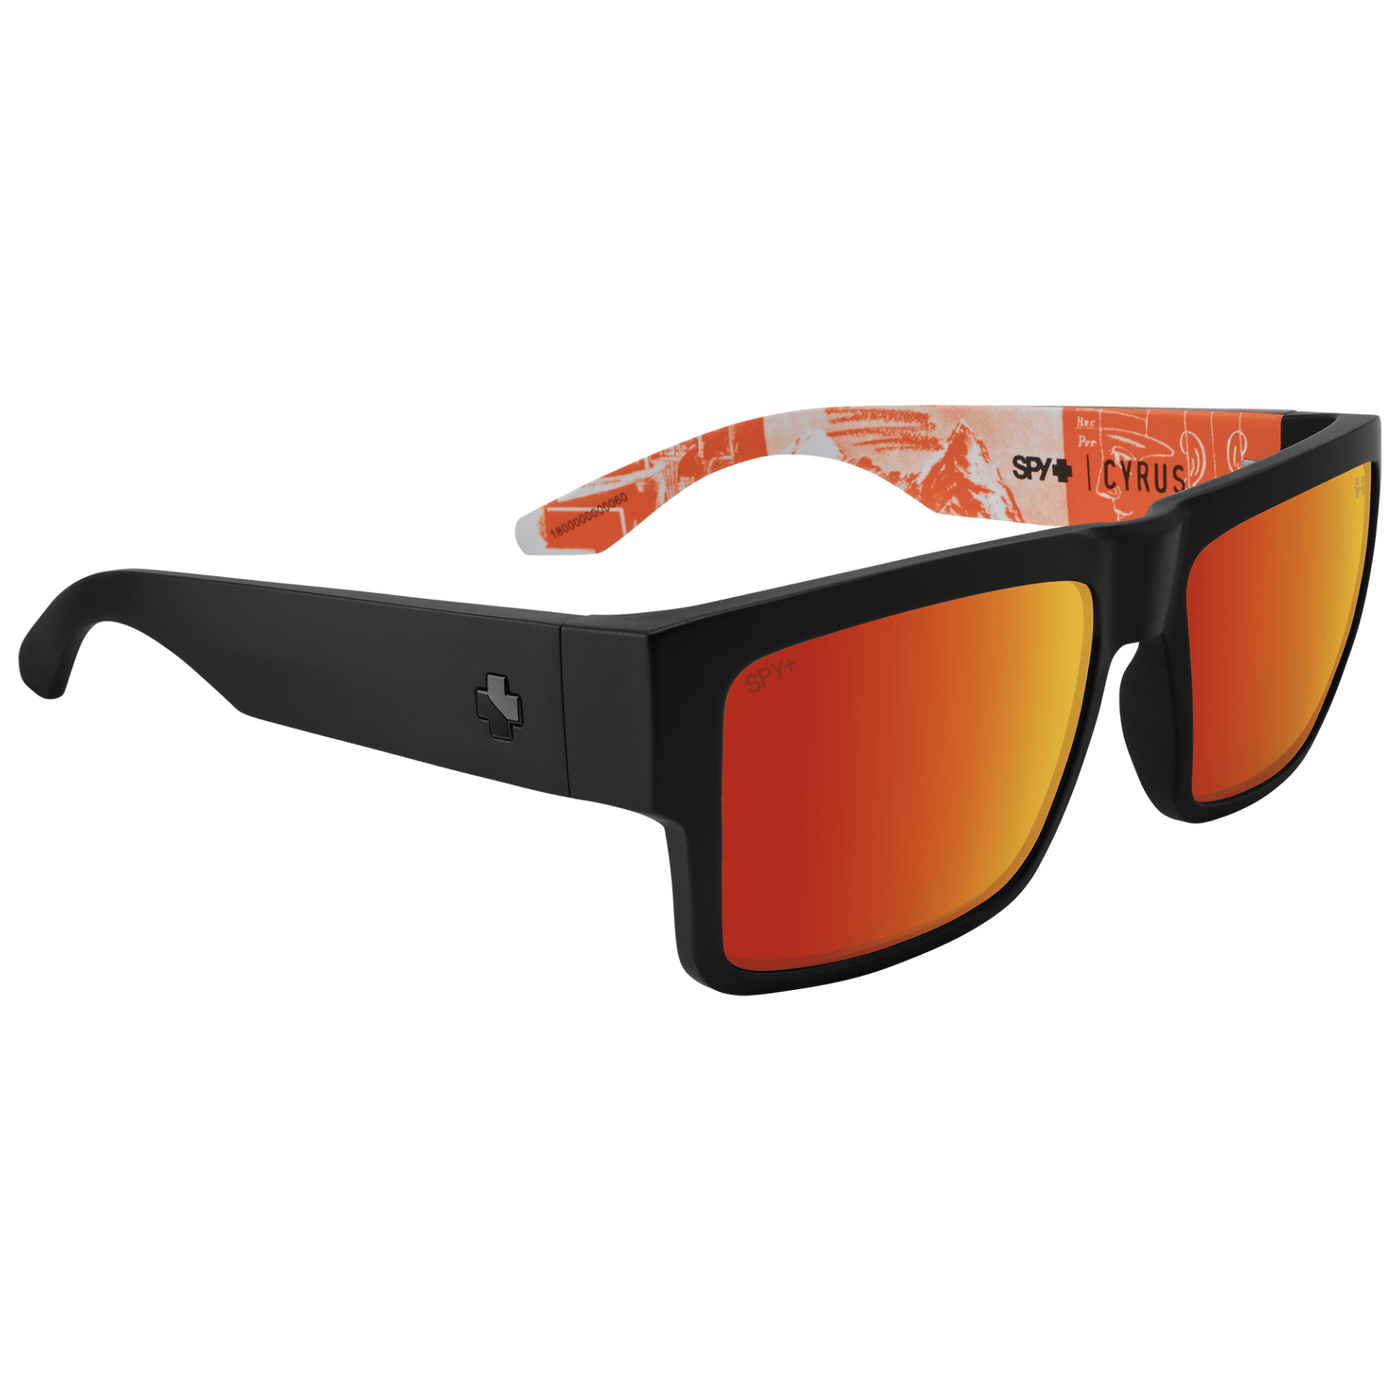 spy optic cyrus flat sunglasses - orange